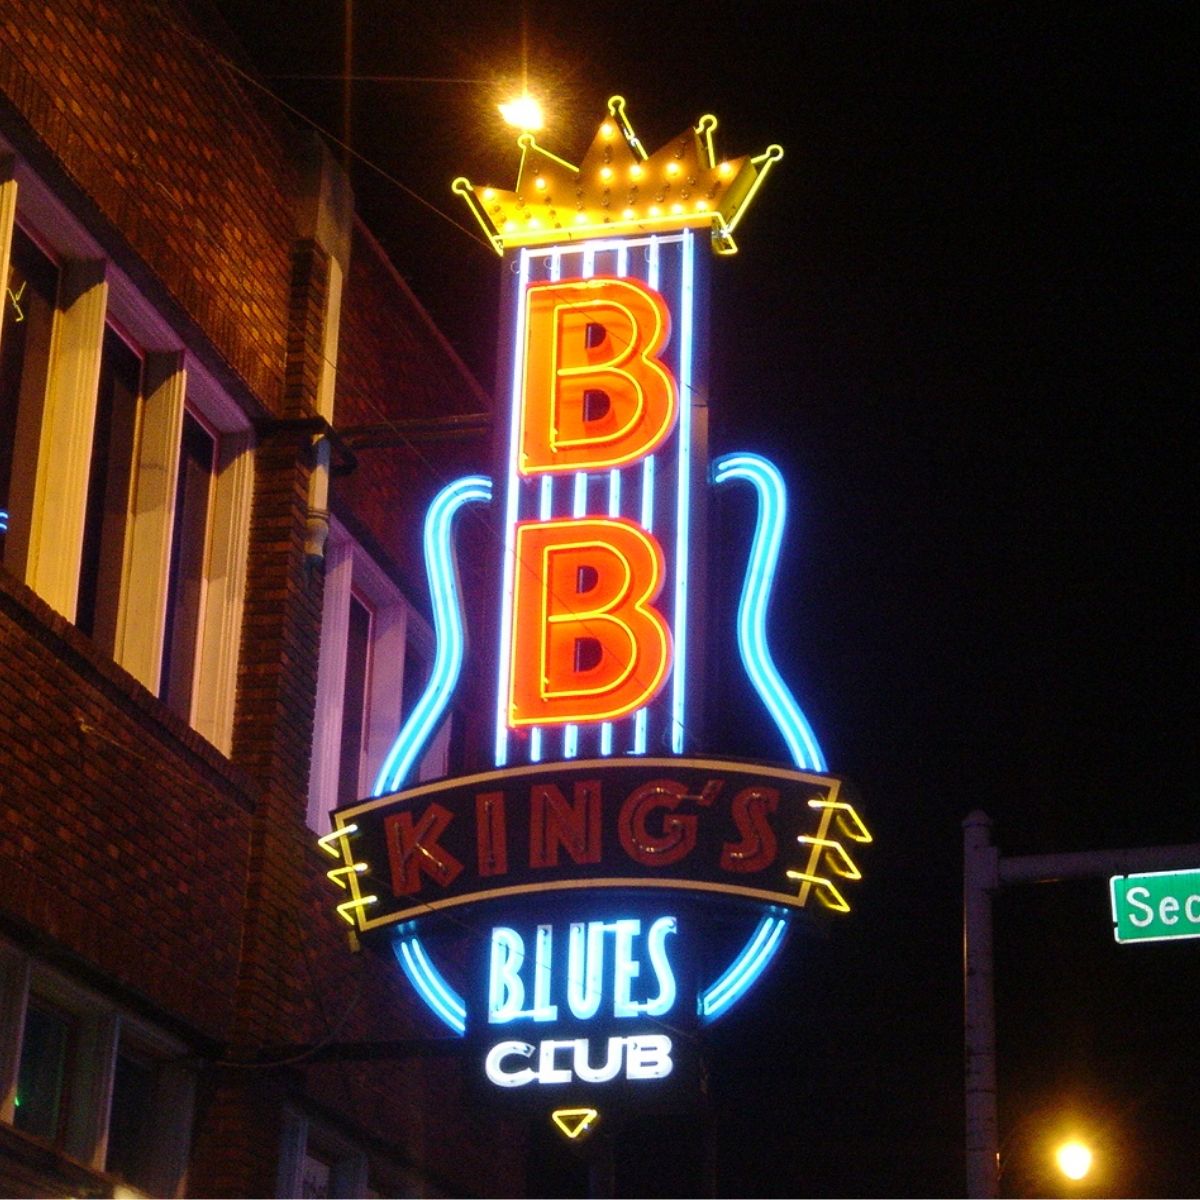 B.B. King's Sinal do Clube Blues. King's Blues Club